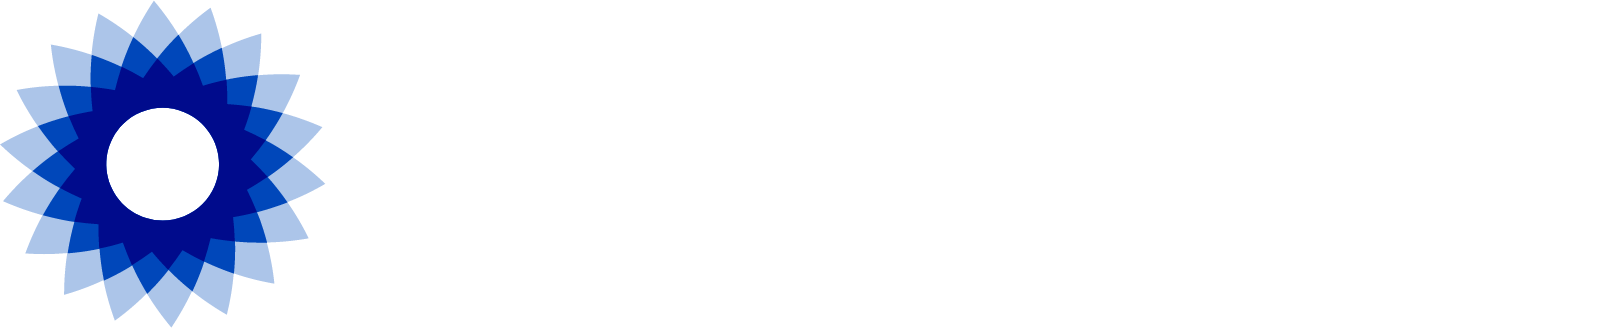 BrightSphere Investment Group logo grand pour les fonds sombres (PNG transparent)